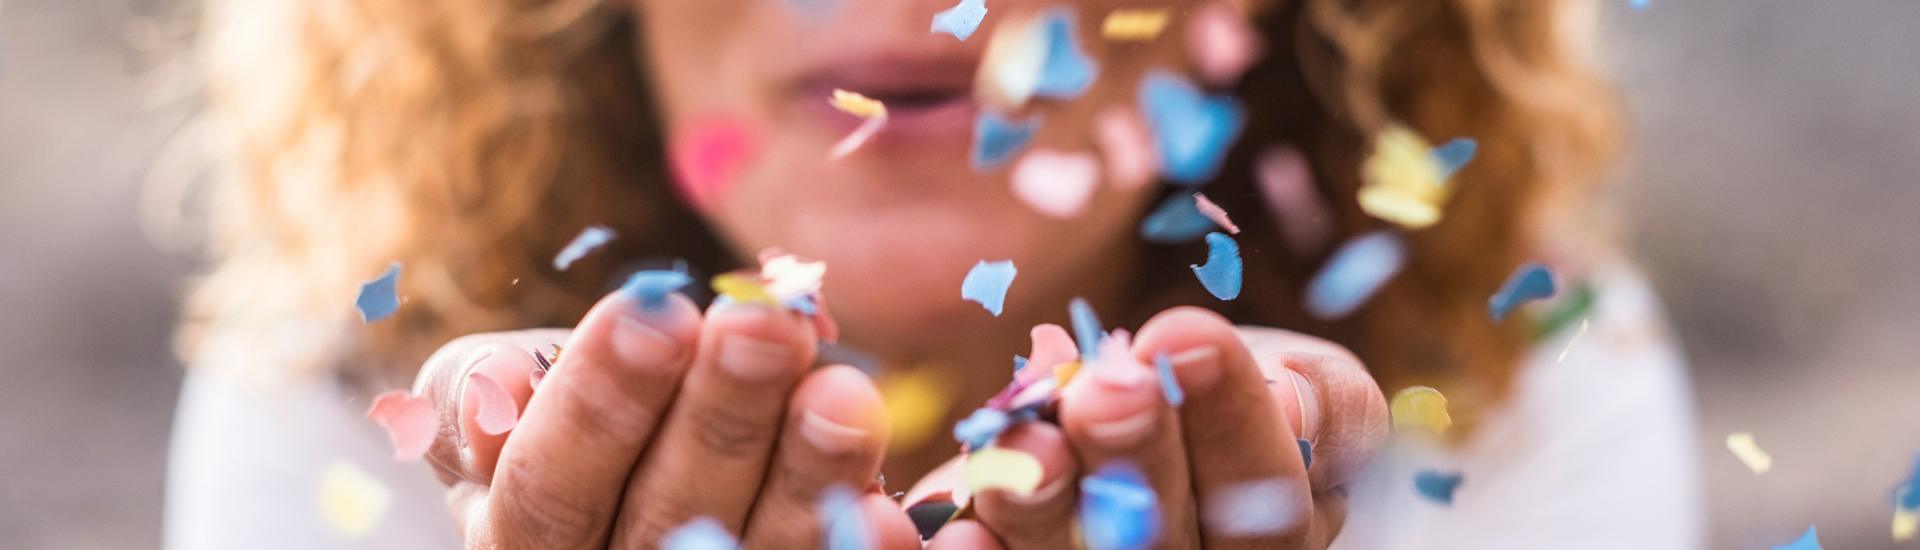 Vrouw blaast gekleurde confetti